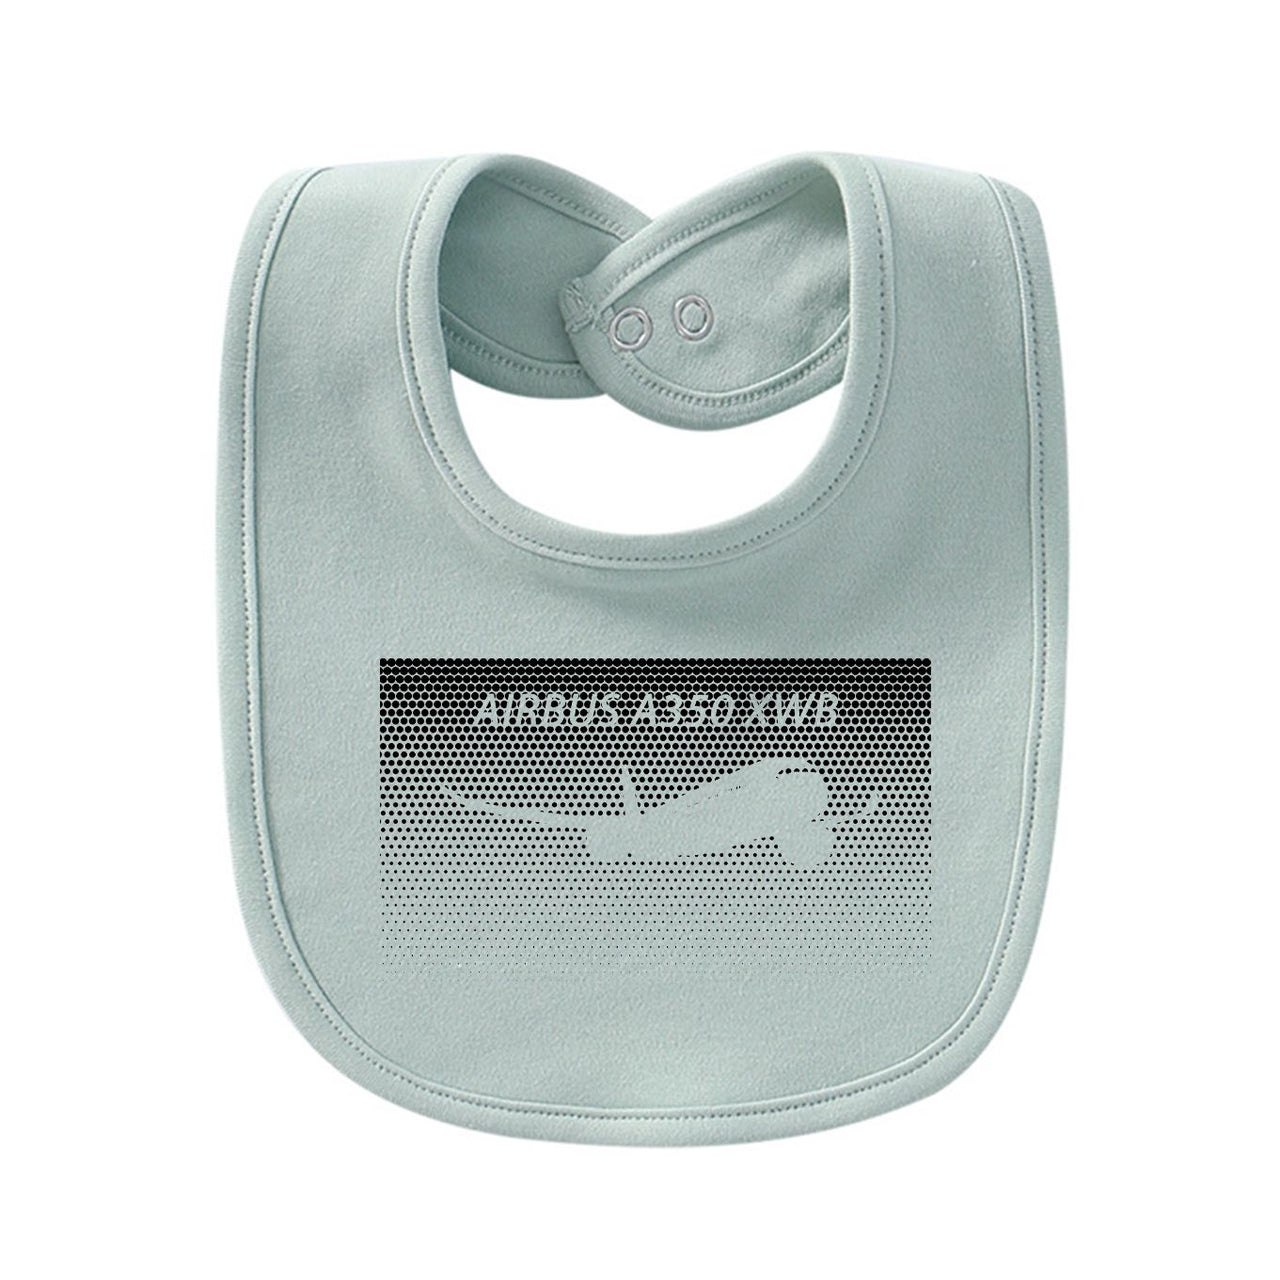 Airbus A350XWB & Dots Designed Baby Saliva & Feeding Towels